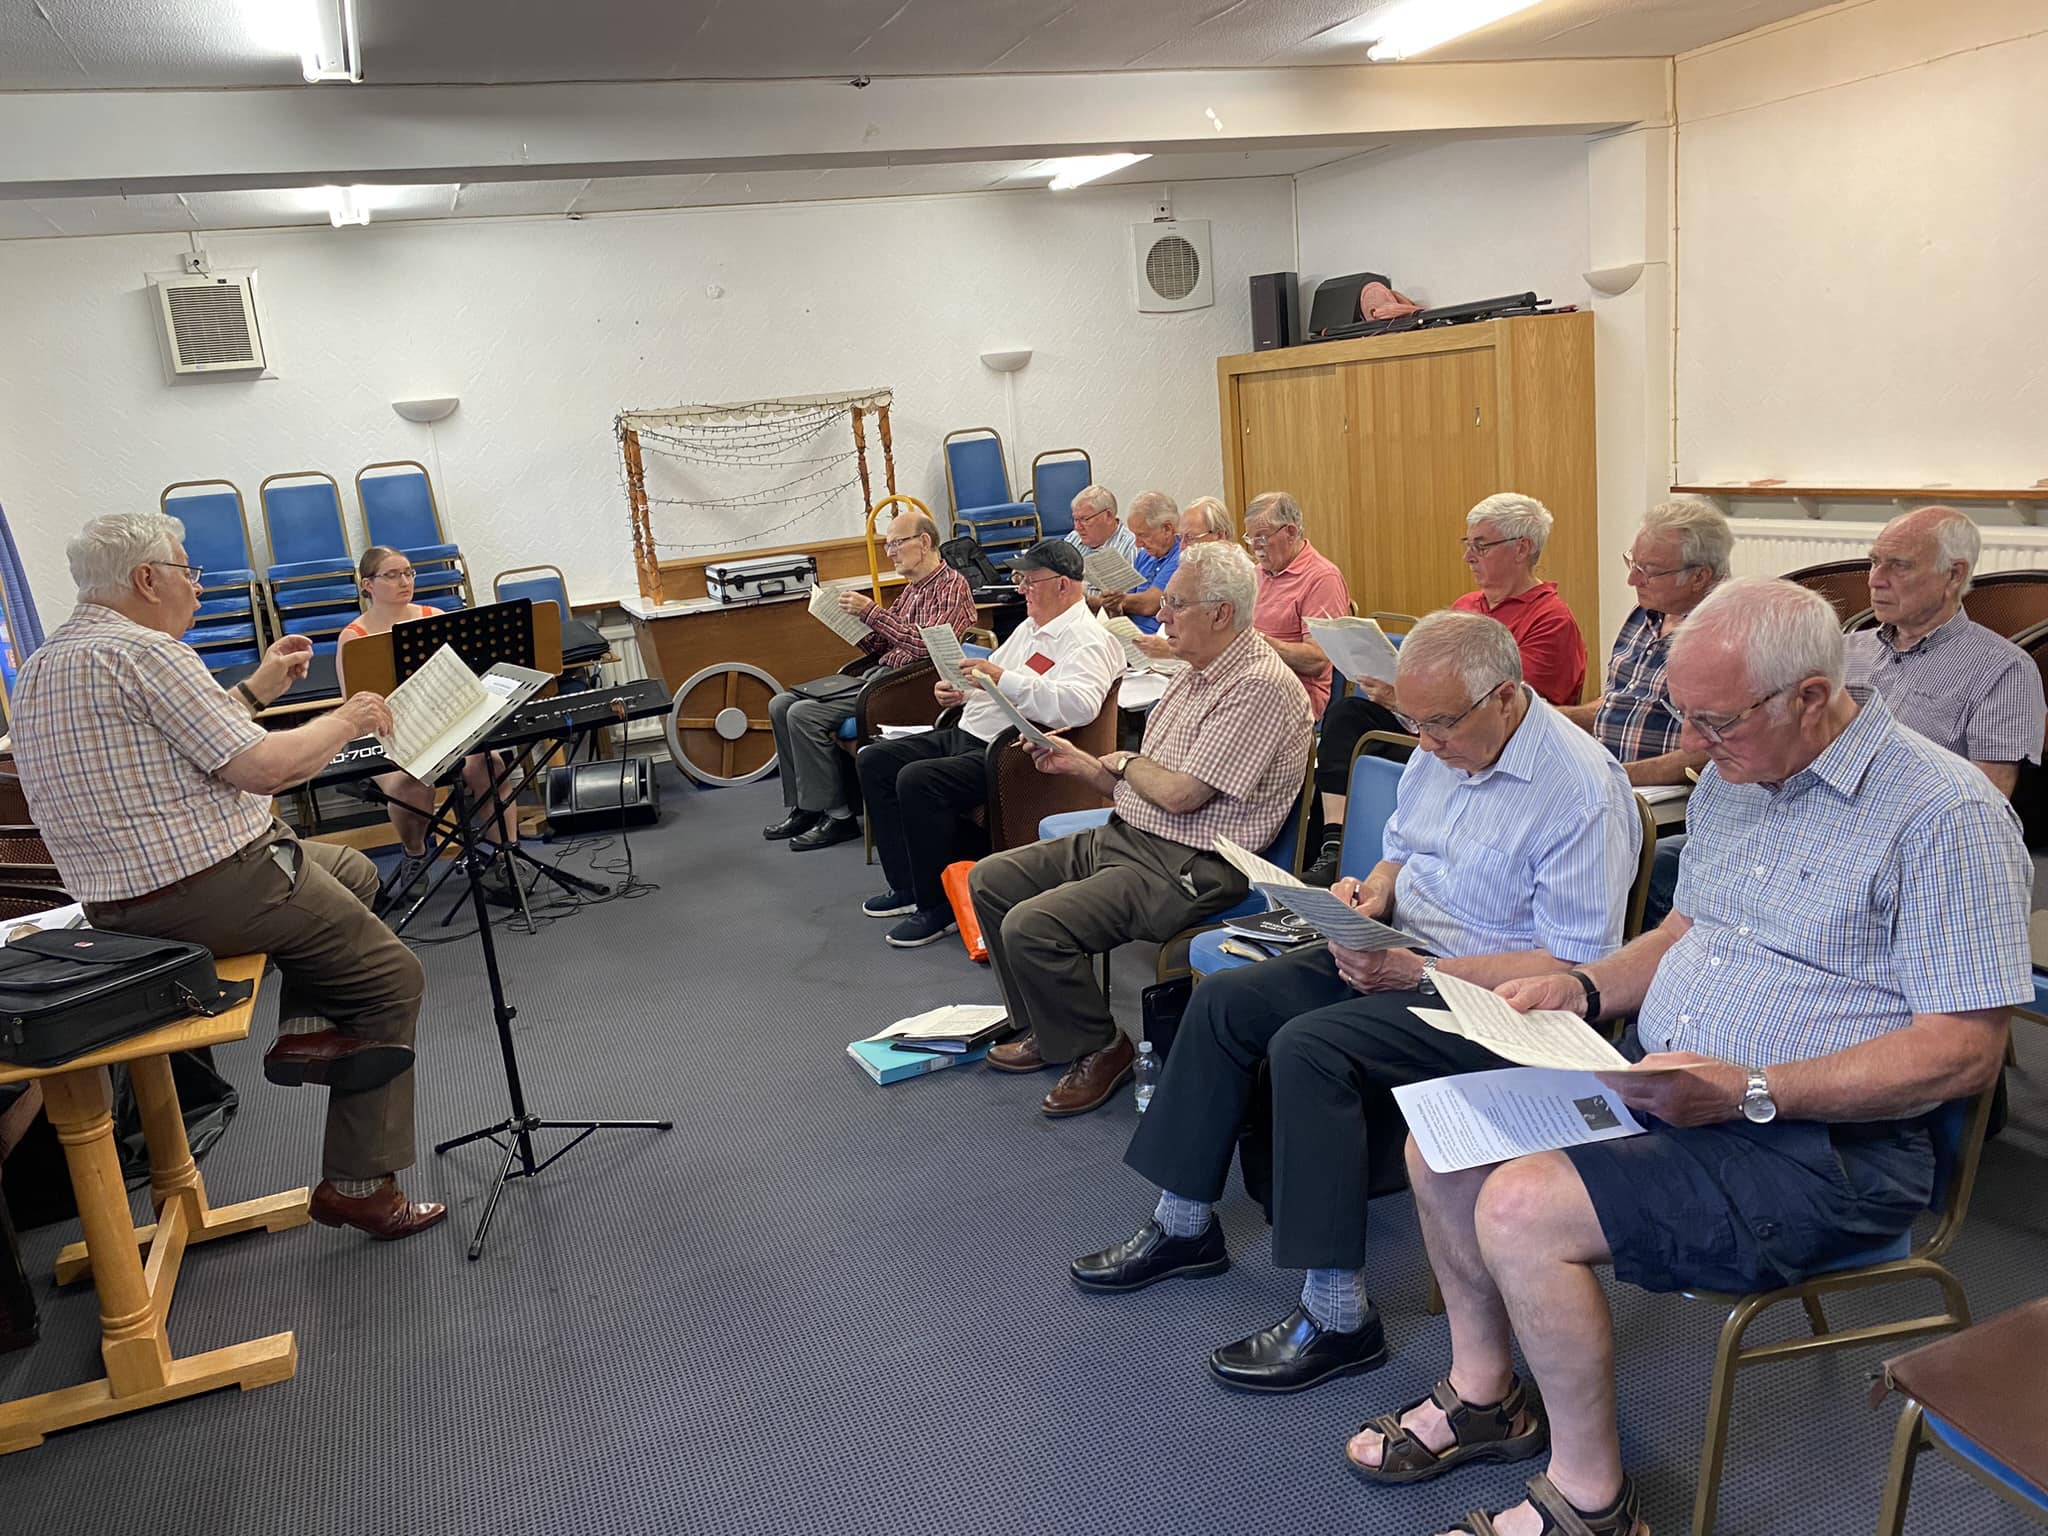 Alfreton Male Voice Choir sing in Latin as members practice new song